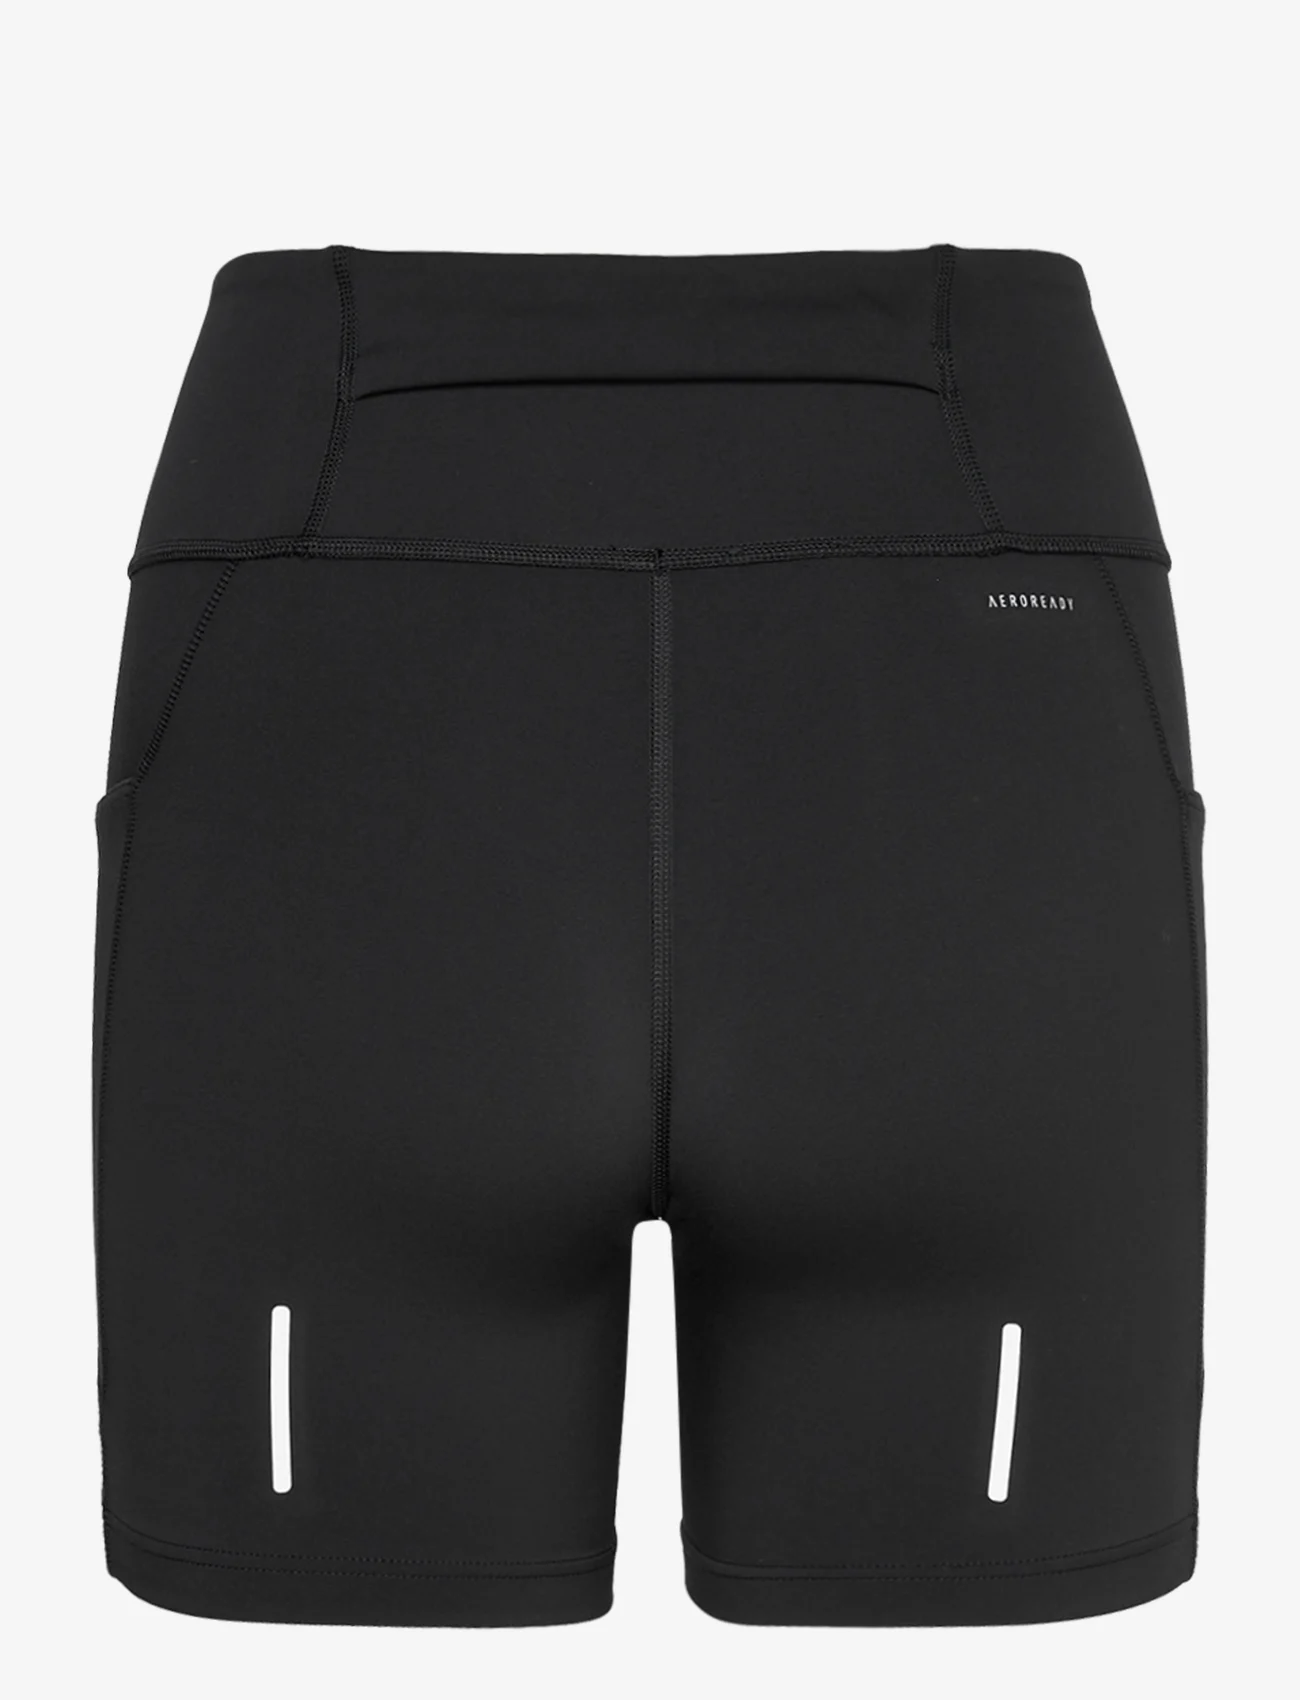 adidas Performance - DailyRun 5Inch - korte sportbroekjes - black/white - 1